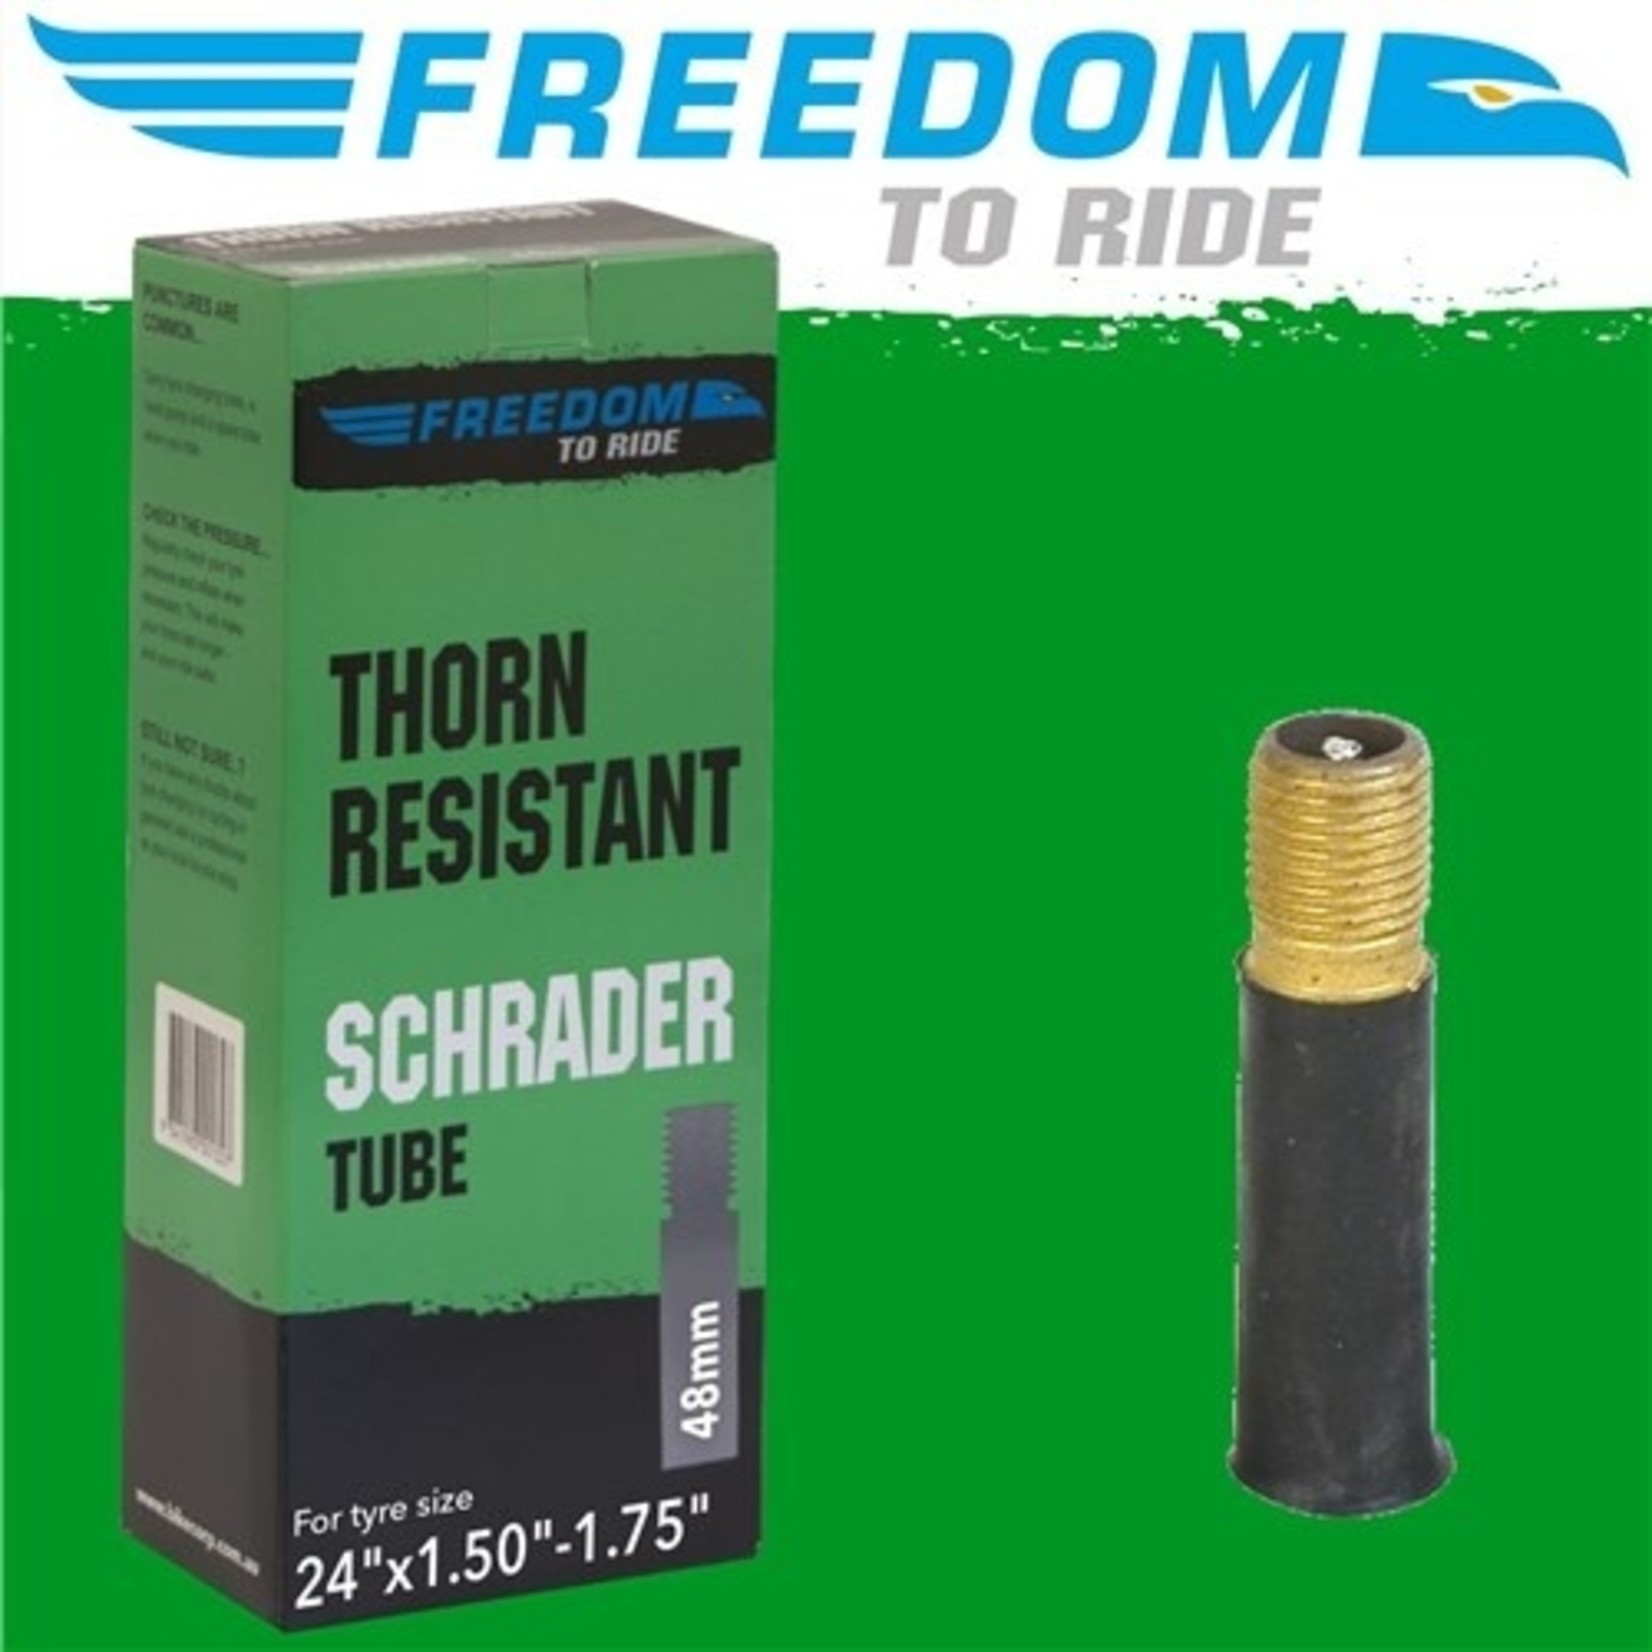 Freedom Freedom Thorn Resistant Bike Tube - 24" X 1.50-1.75" - Schrader Valve